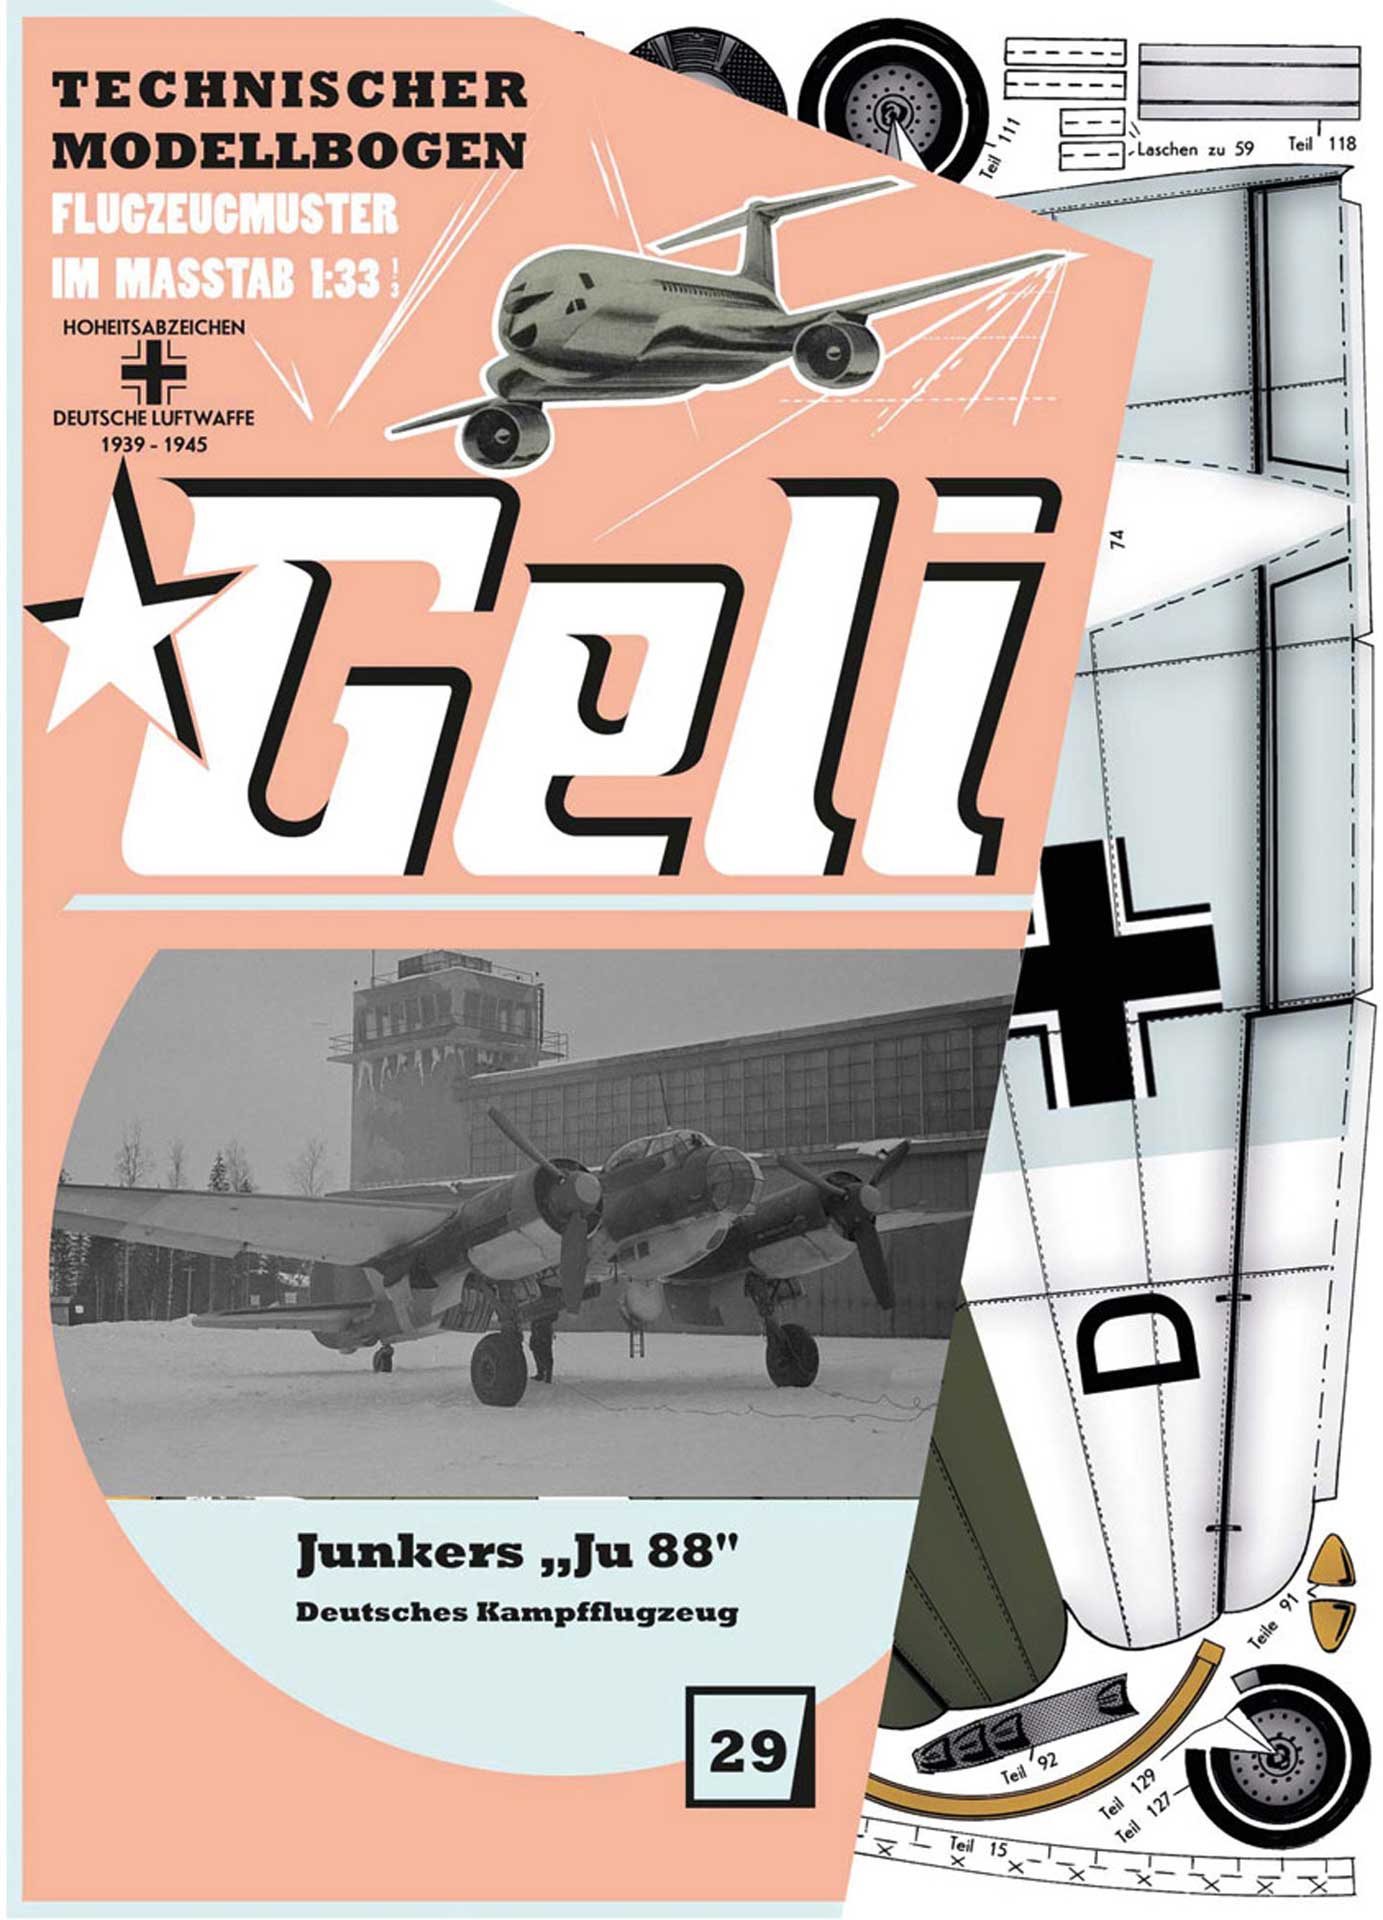 GELI Junkers "Ju88" # 29 KARTONMODELL